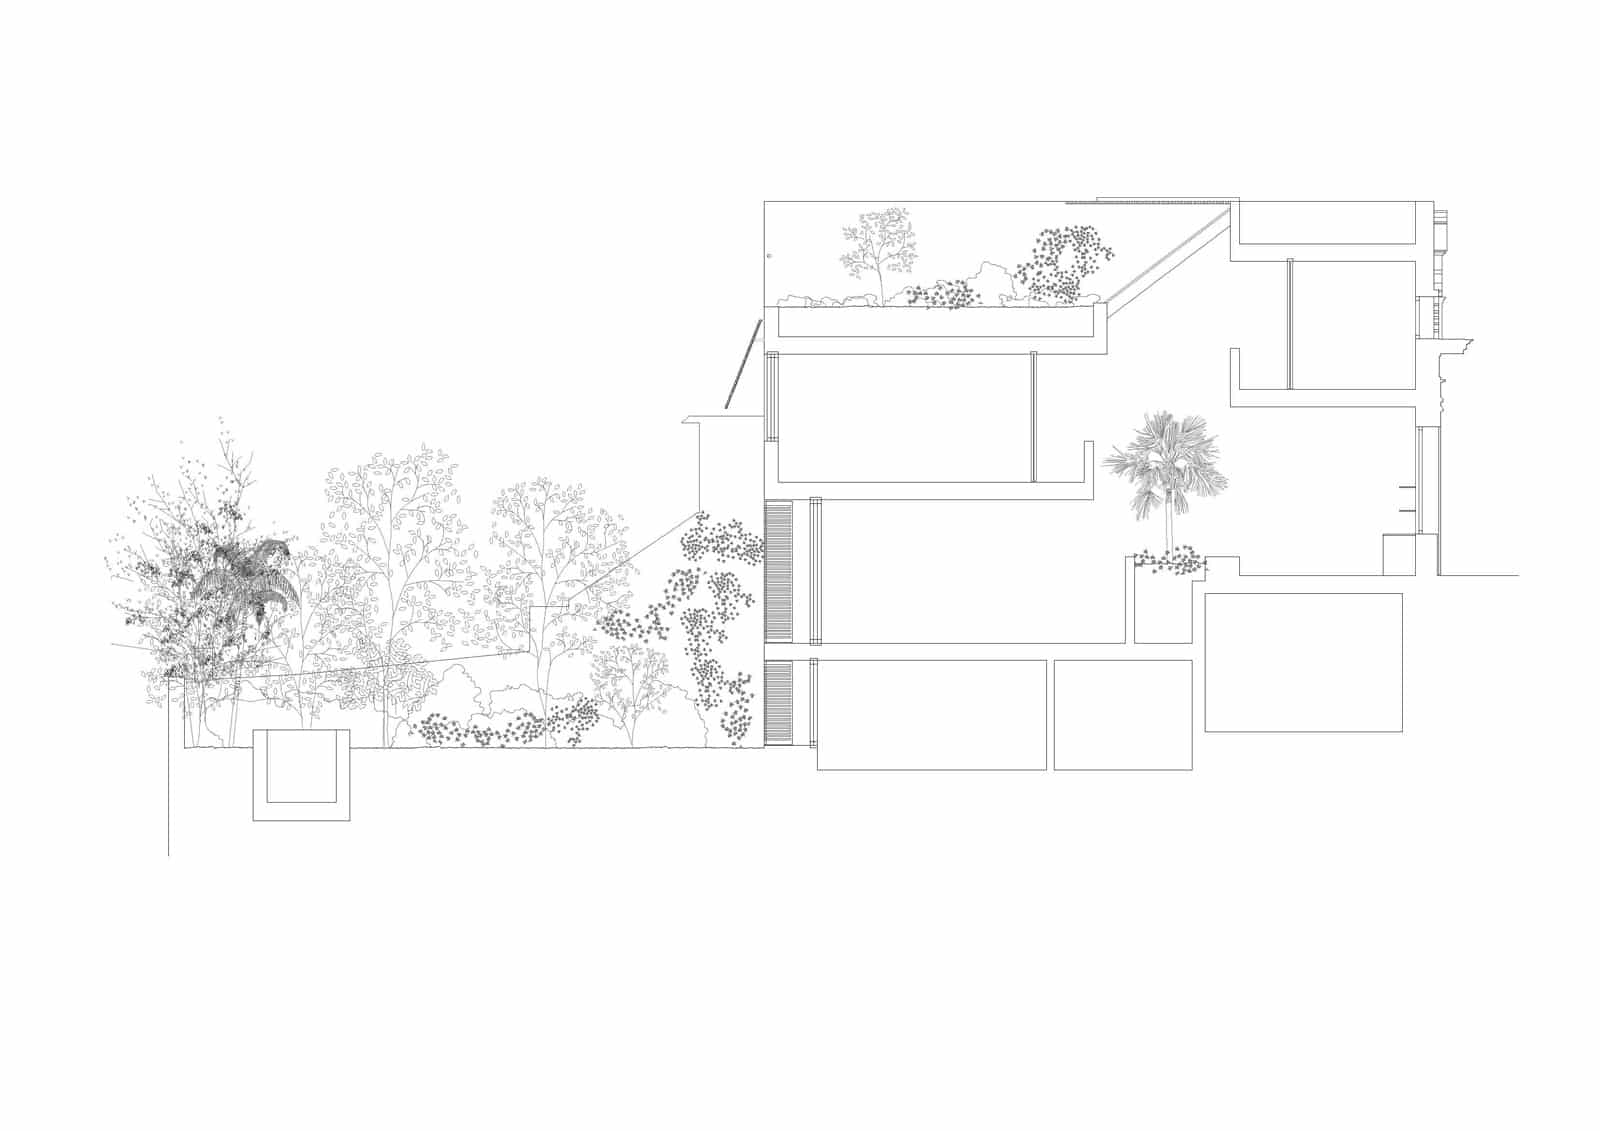 Image of 20220211 ArquitecturaG VerdiHouse 10 1 in Verdi House - Cosentino